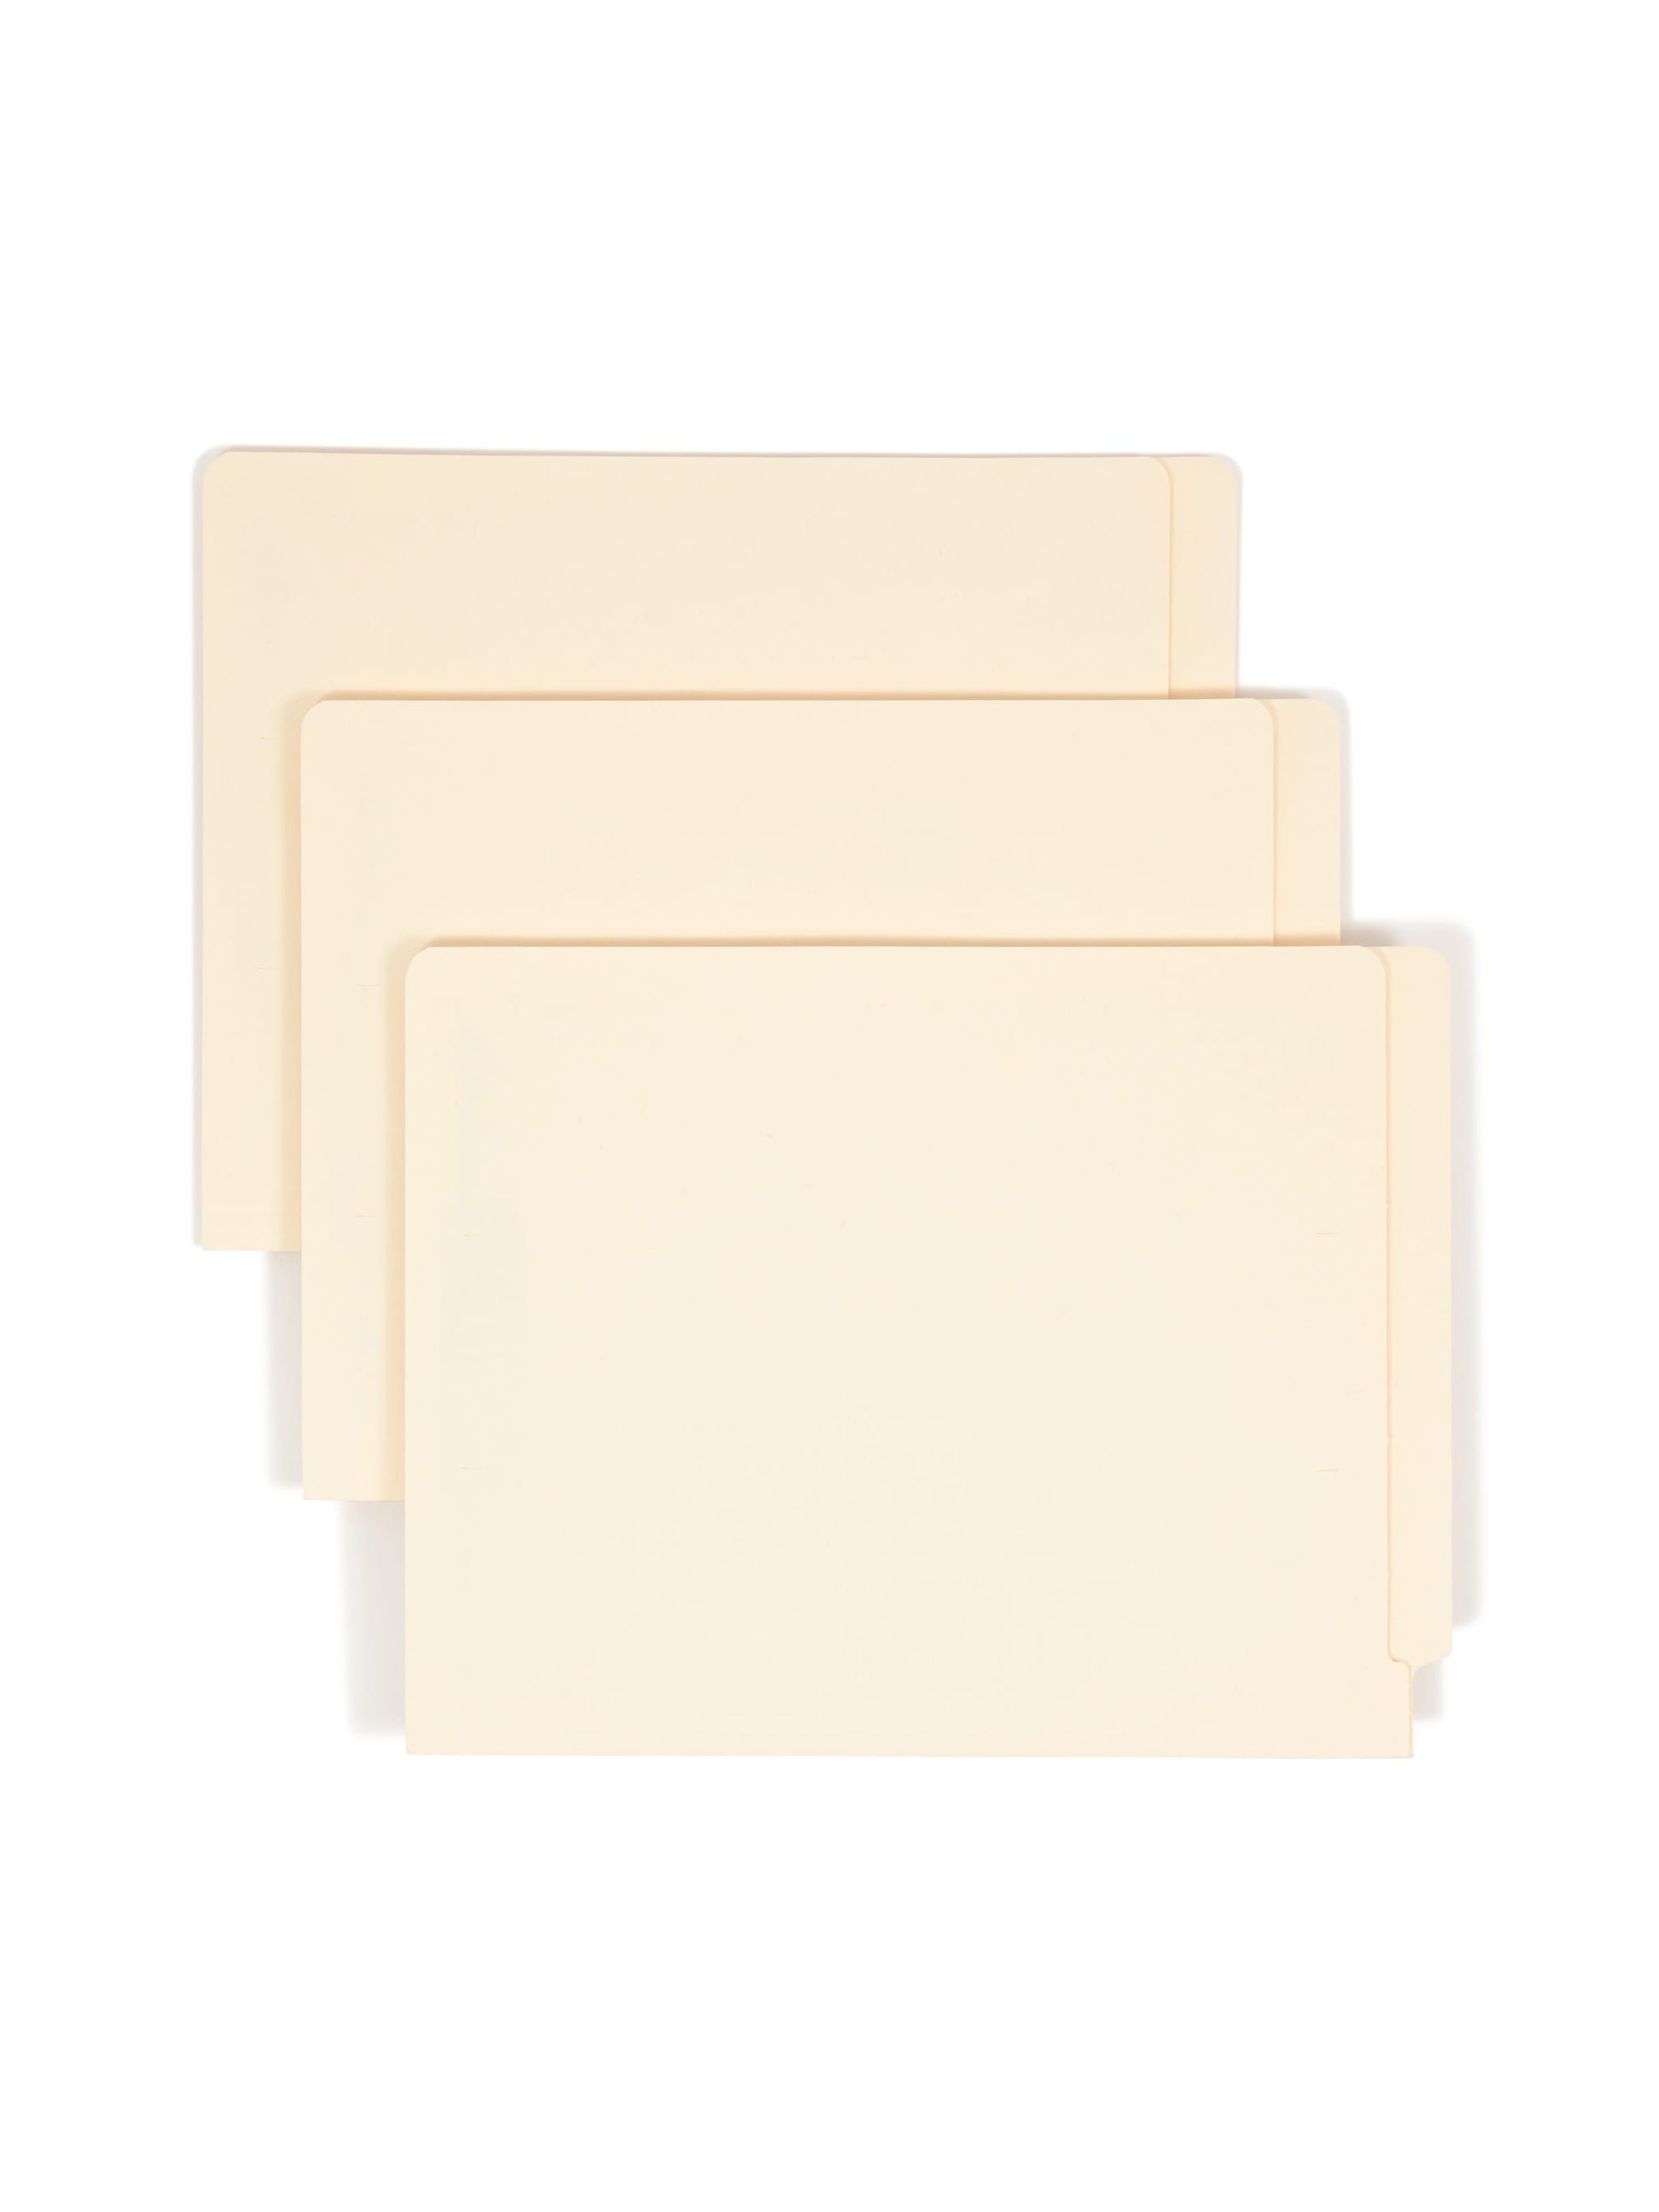 Shelf-Master® Reinforced End Tab Fastener File Folders, Straight-Cut Tab, 2 Fasteners, Bi-lingual, Manila Color, Letter Size, Set of 50, 086486246002